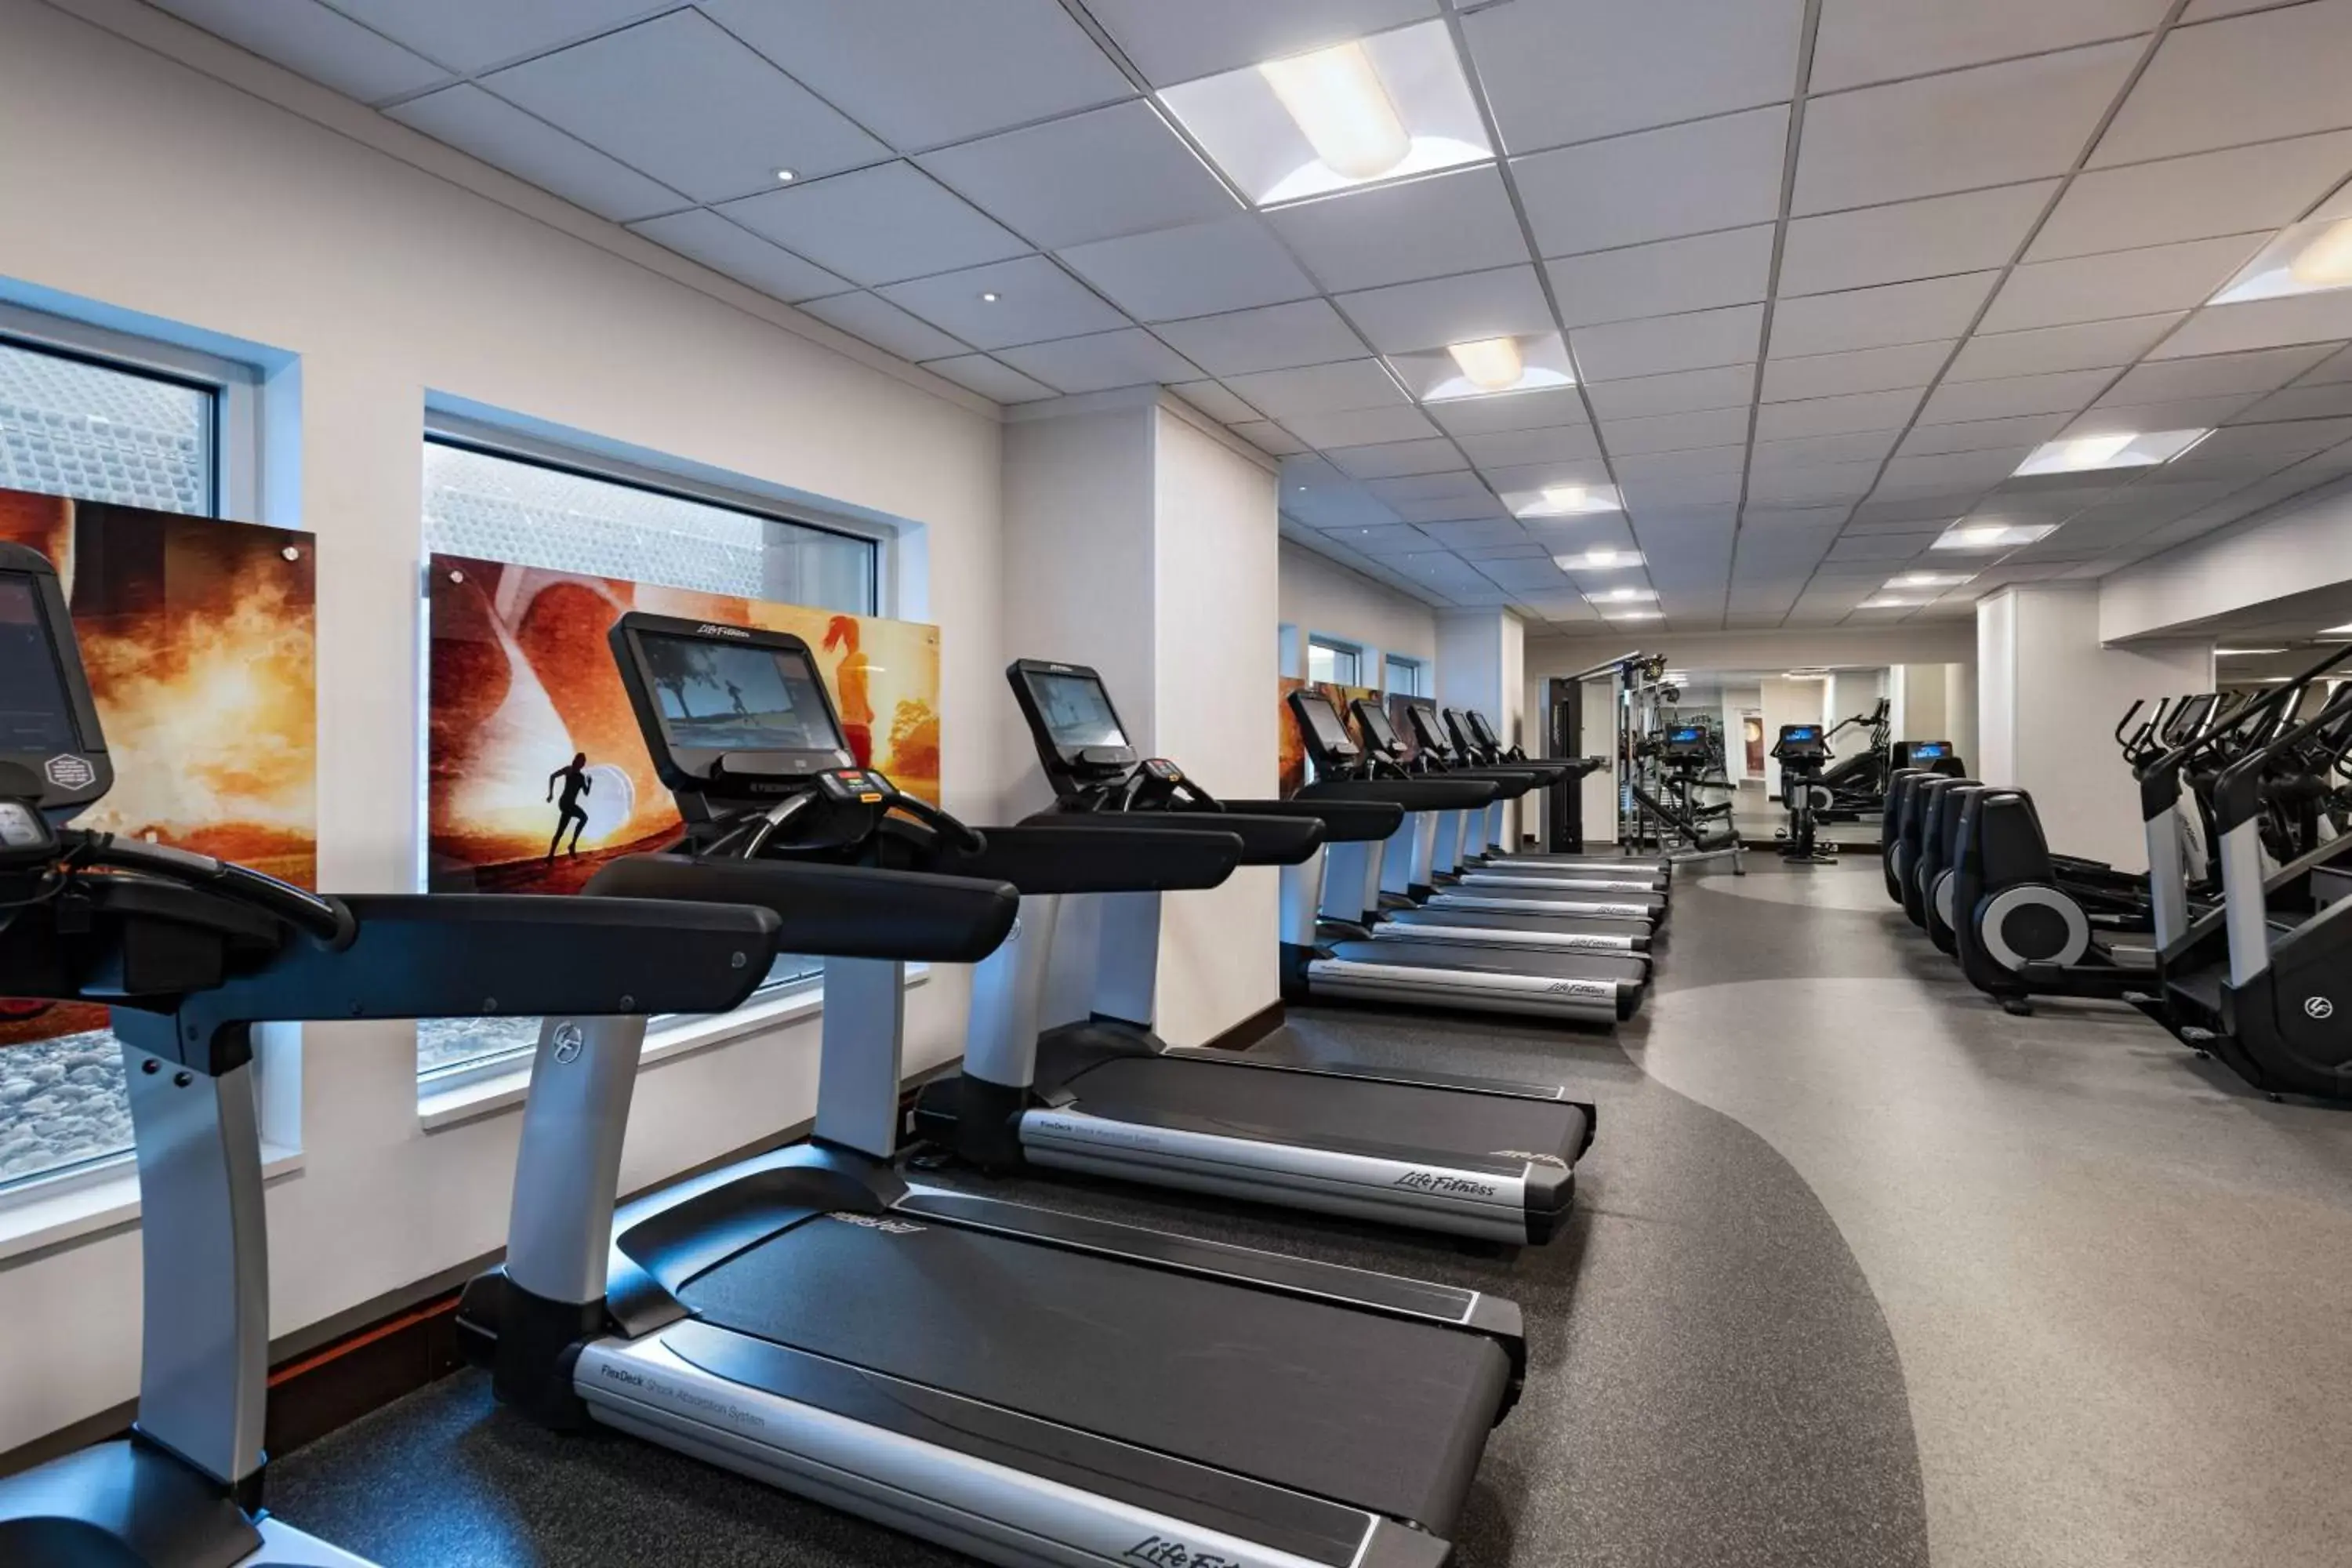 Fitness centre/facilities, Fitness Center/Facilities in San Antonio Marriott Rivercenter on the River Walk